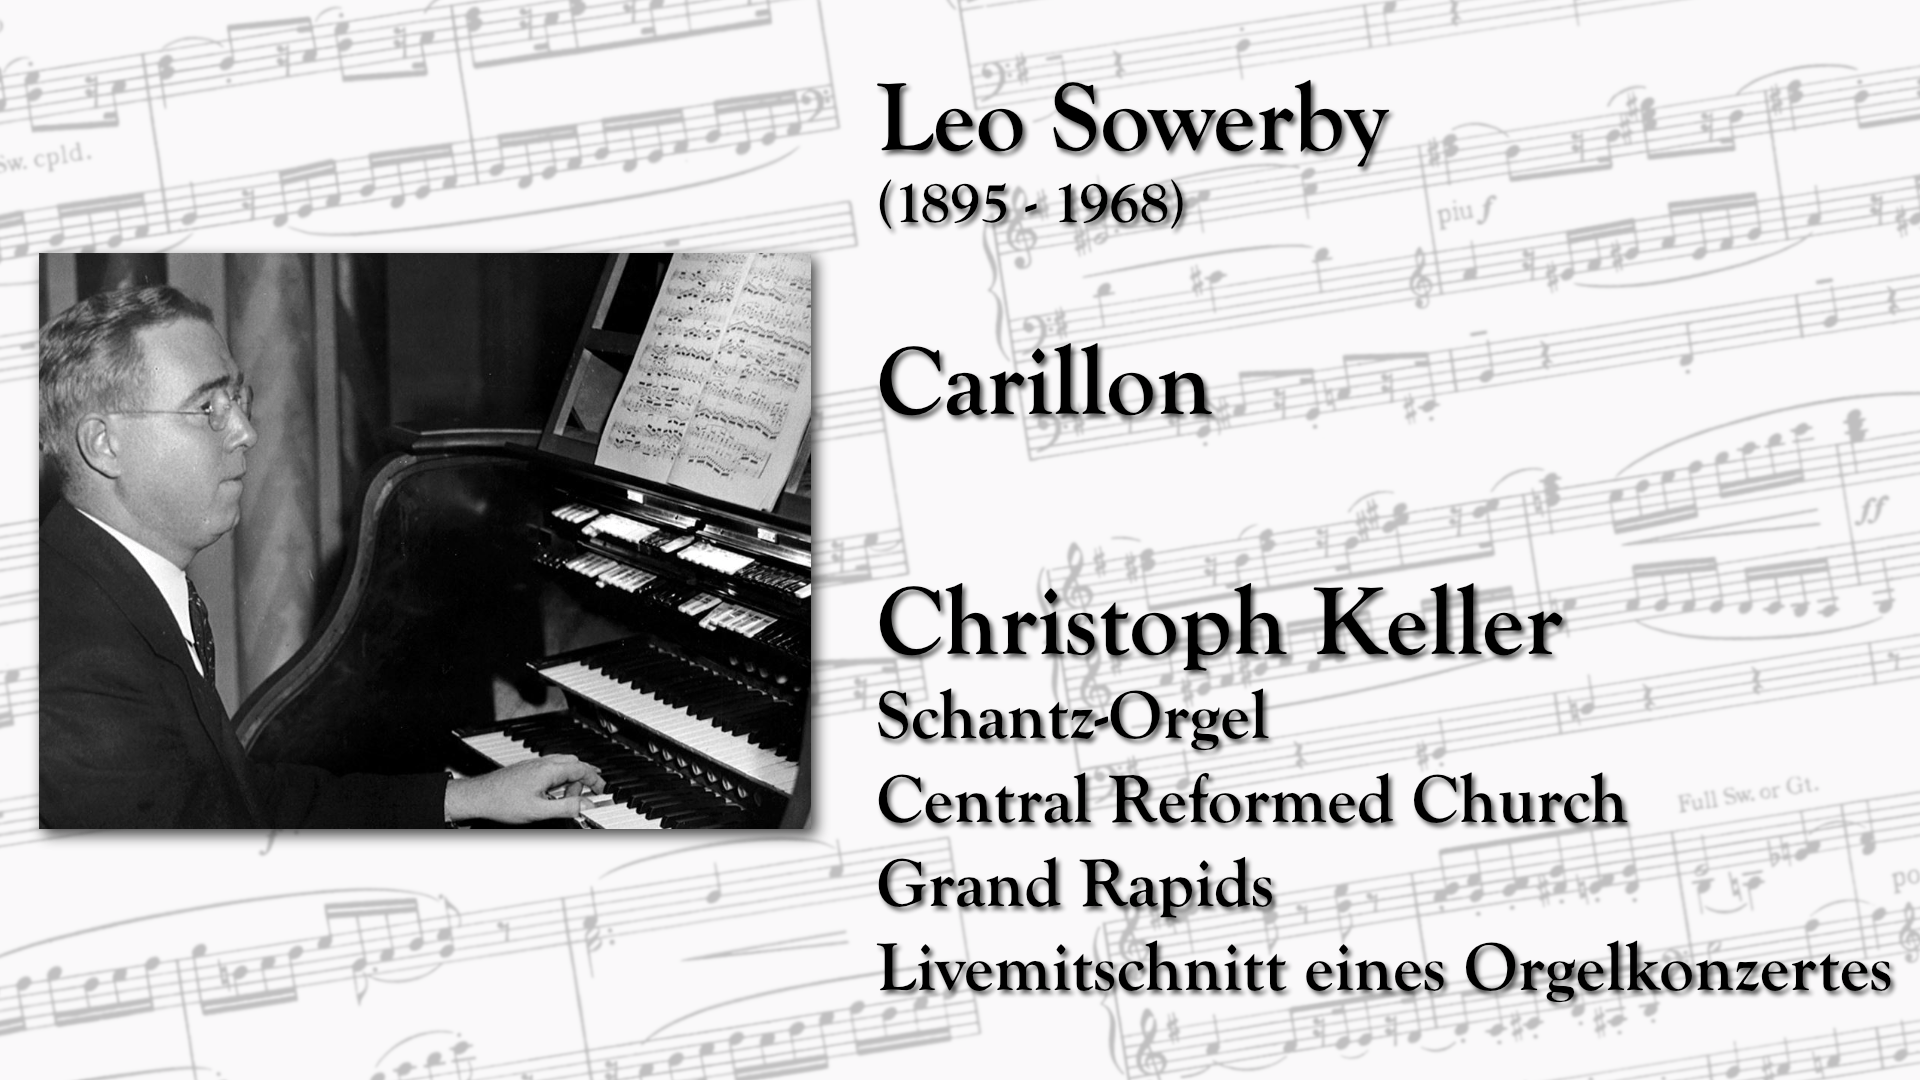 Leo Sowerby • Carillon Grand Rapids Central Reformed Church Christoph Keller